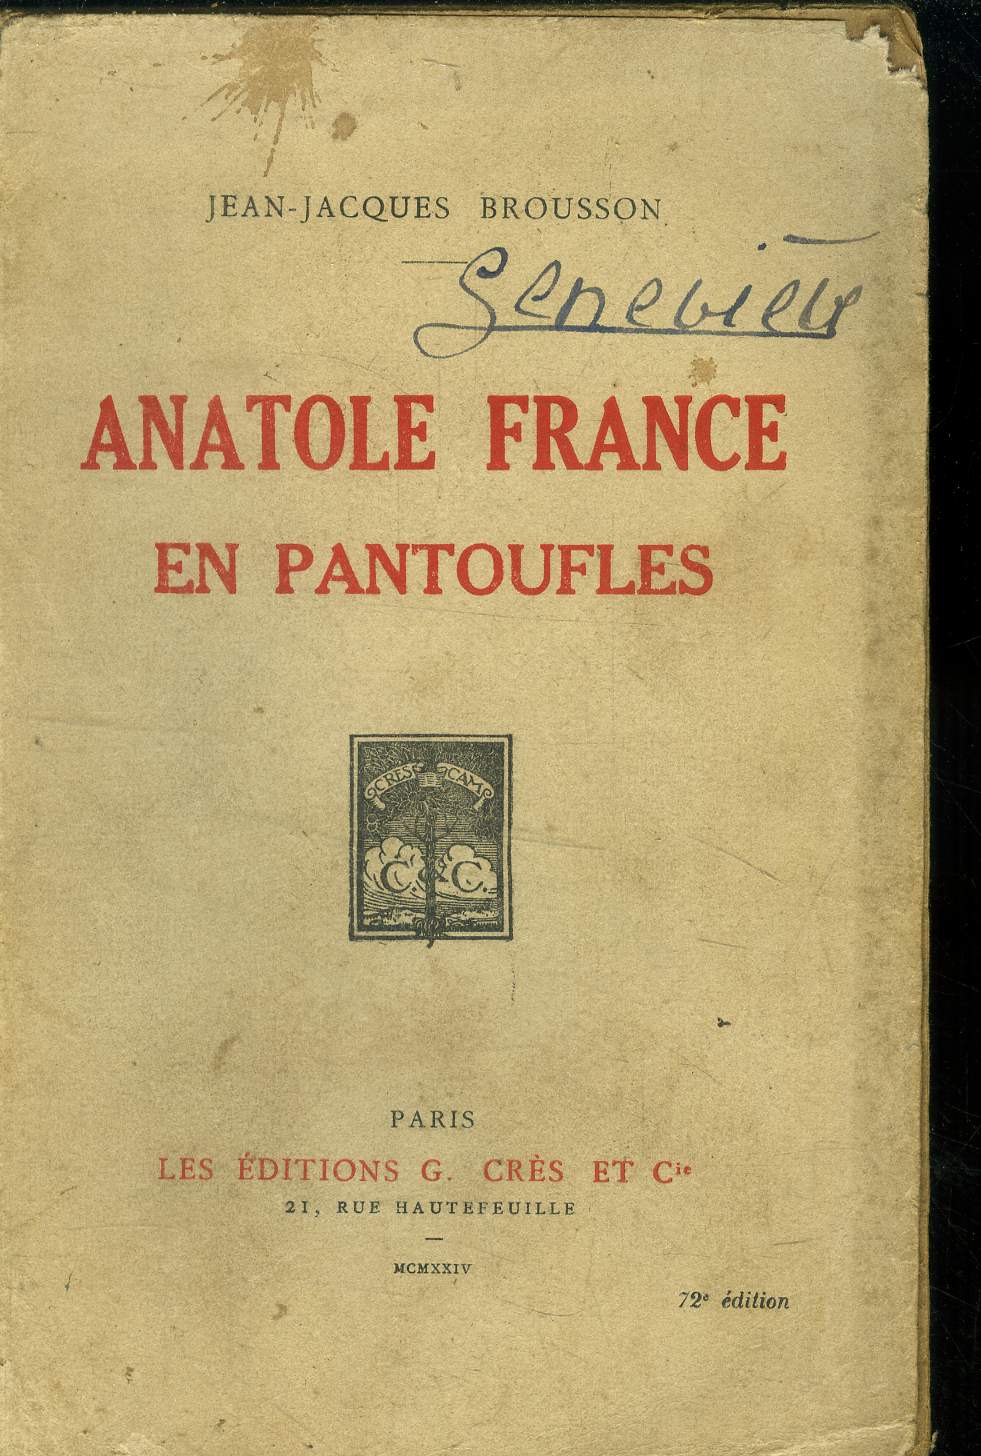 Anatole France en pantoufles.